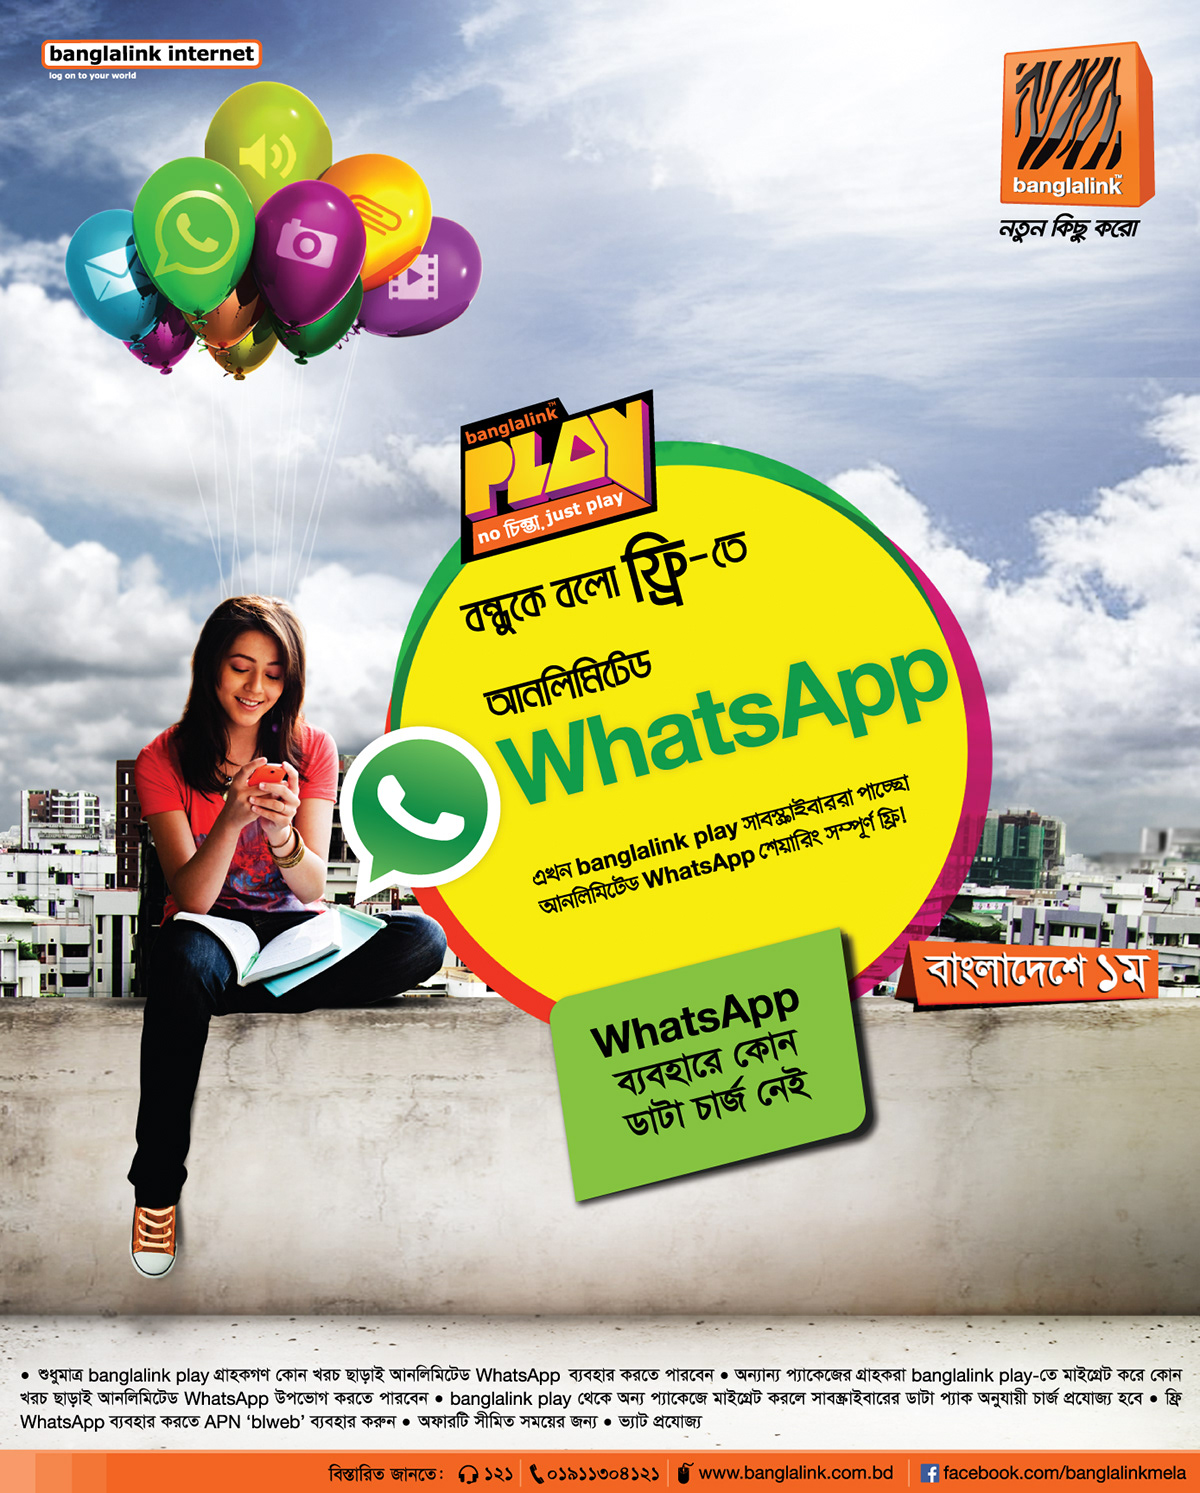 WhatsApp app Bangladesh telco